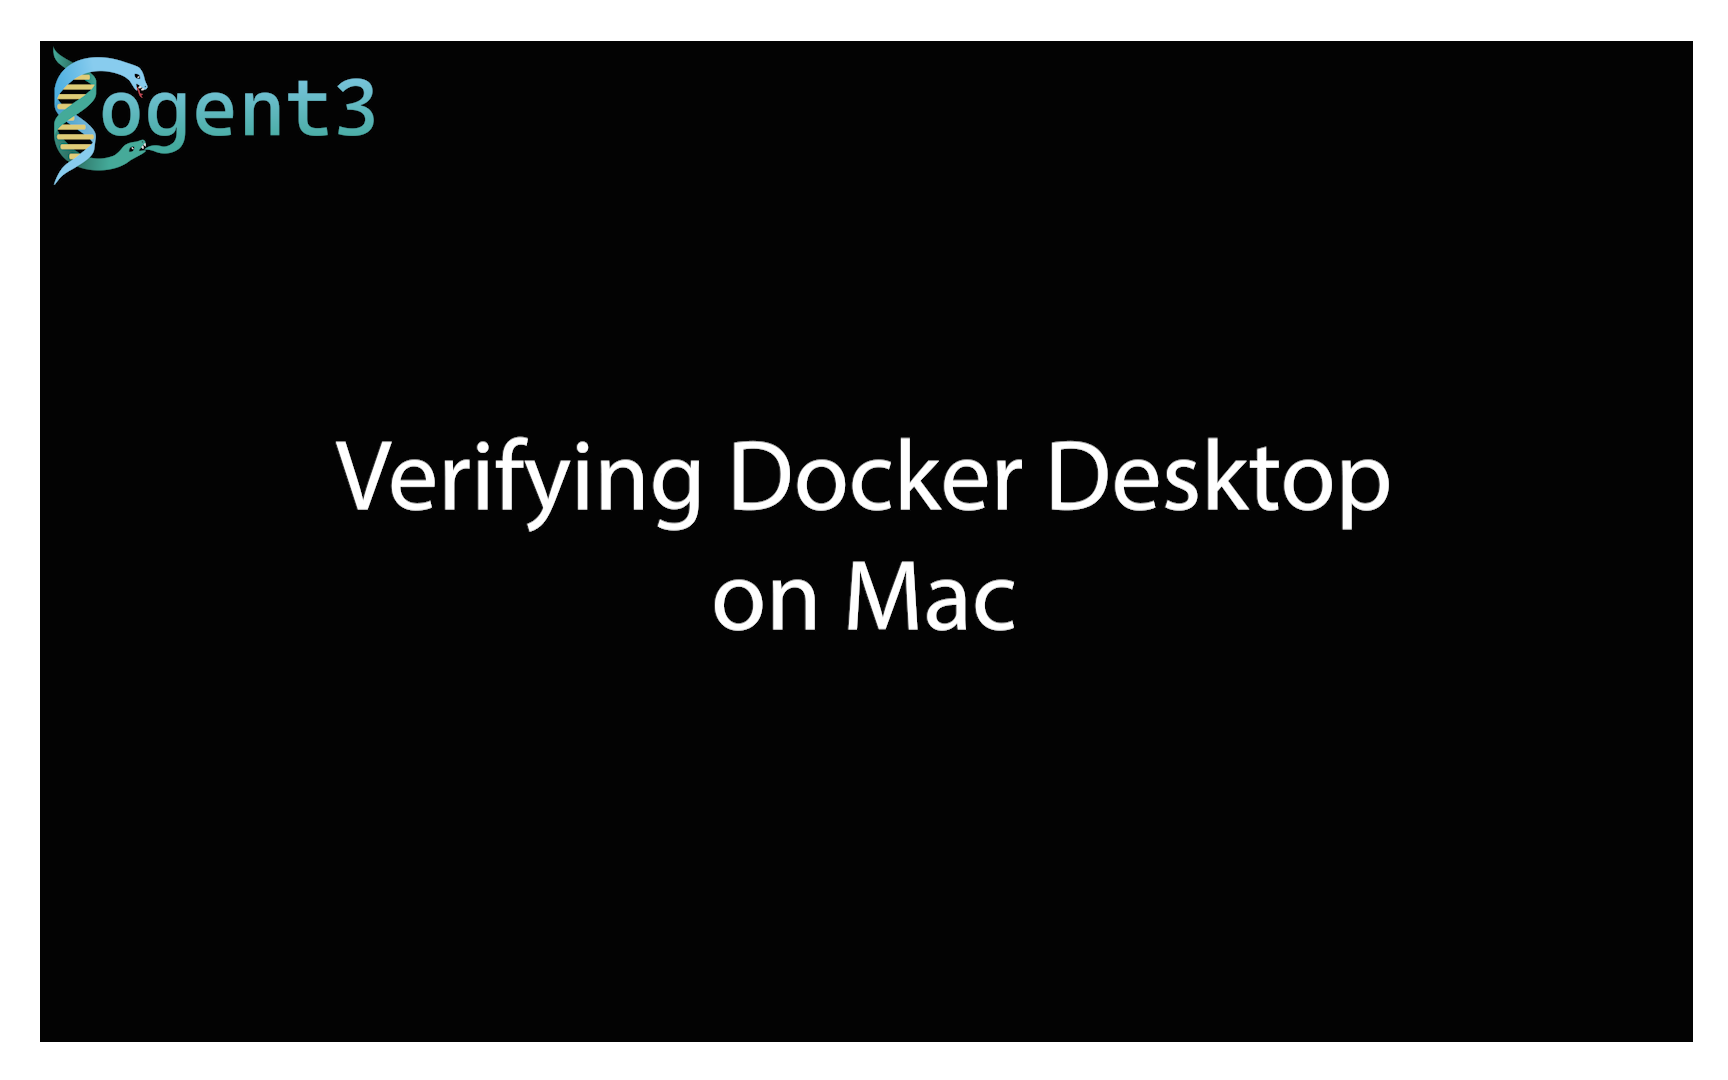 Verifying that Docker is running on Mac